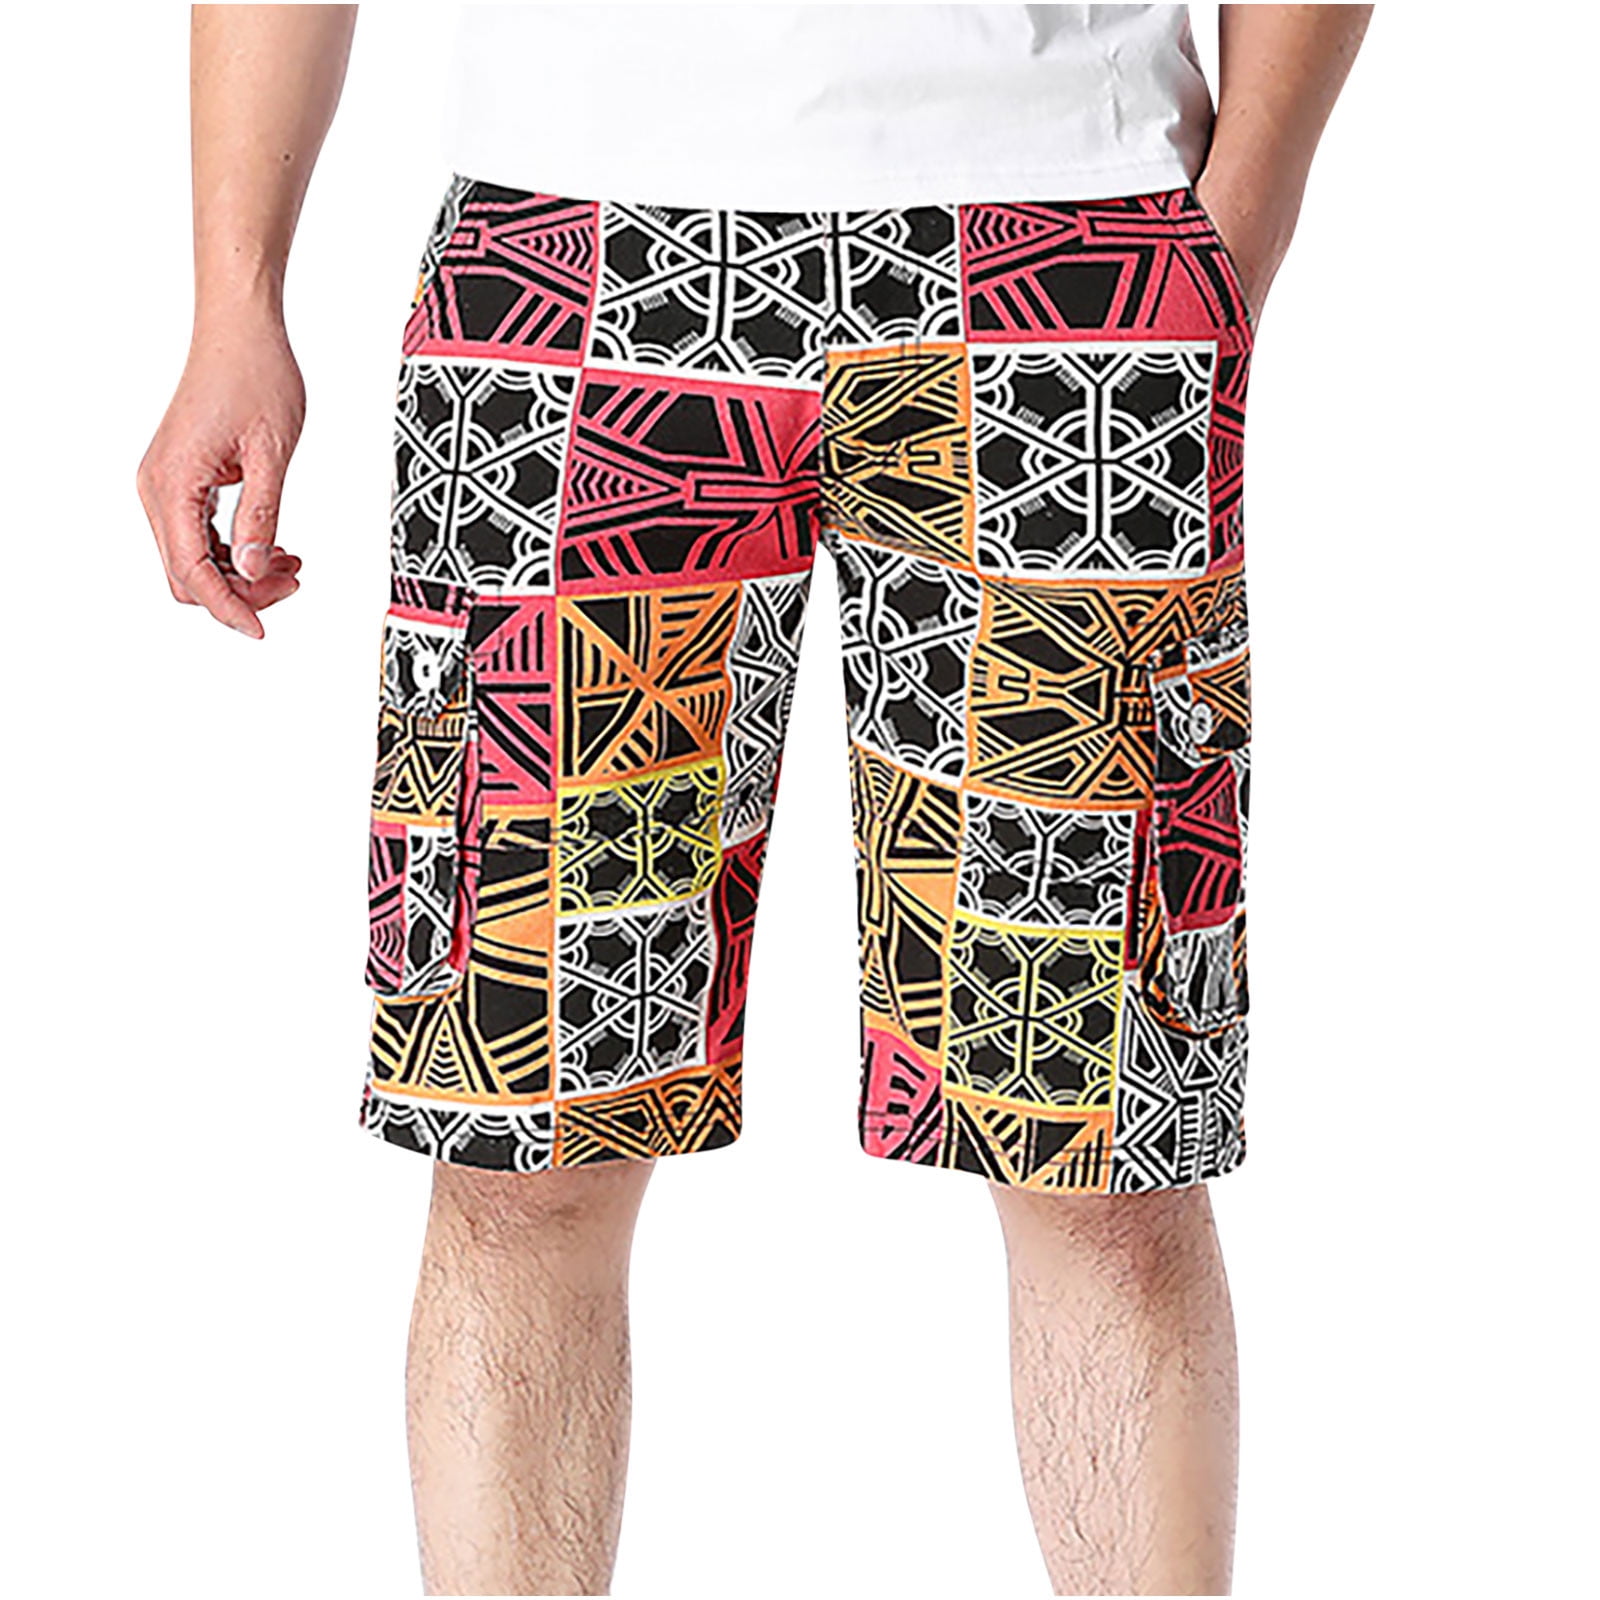 YYDGH Men's Cargo Shorts Striped Print Casual Shorts Summer